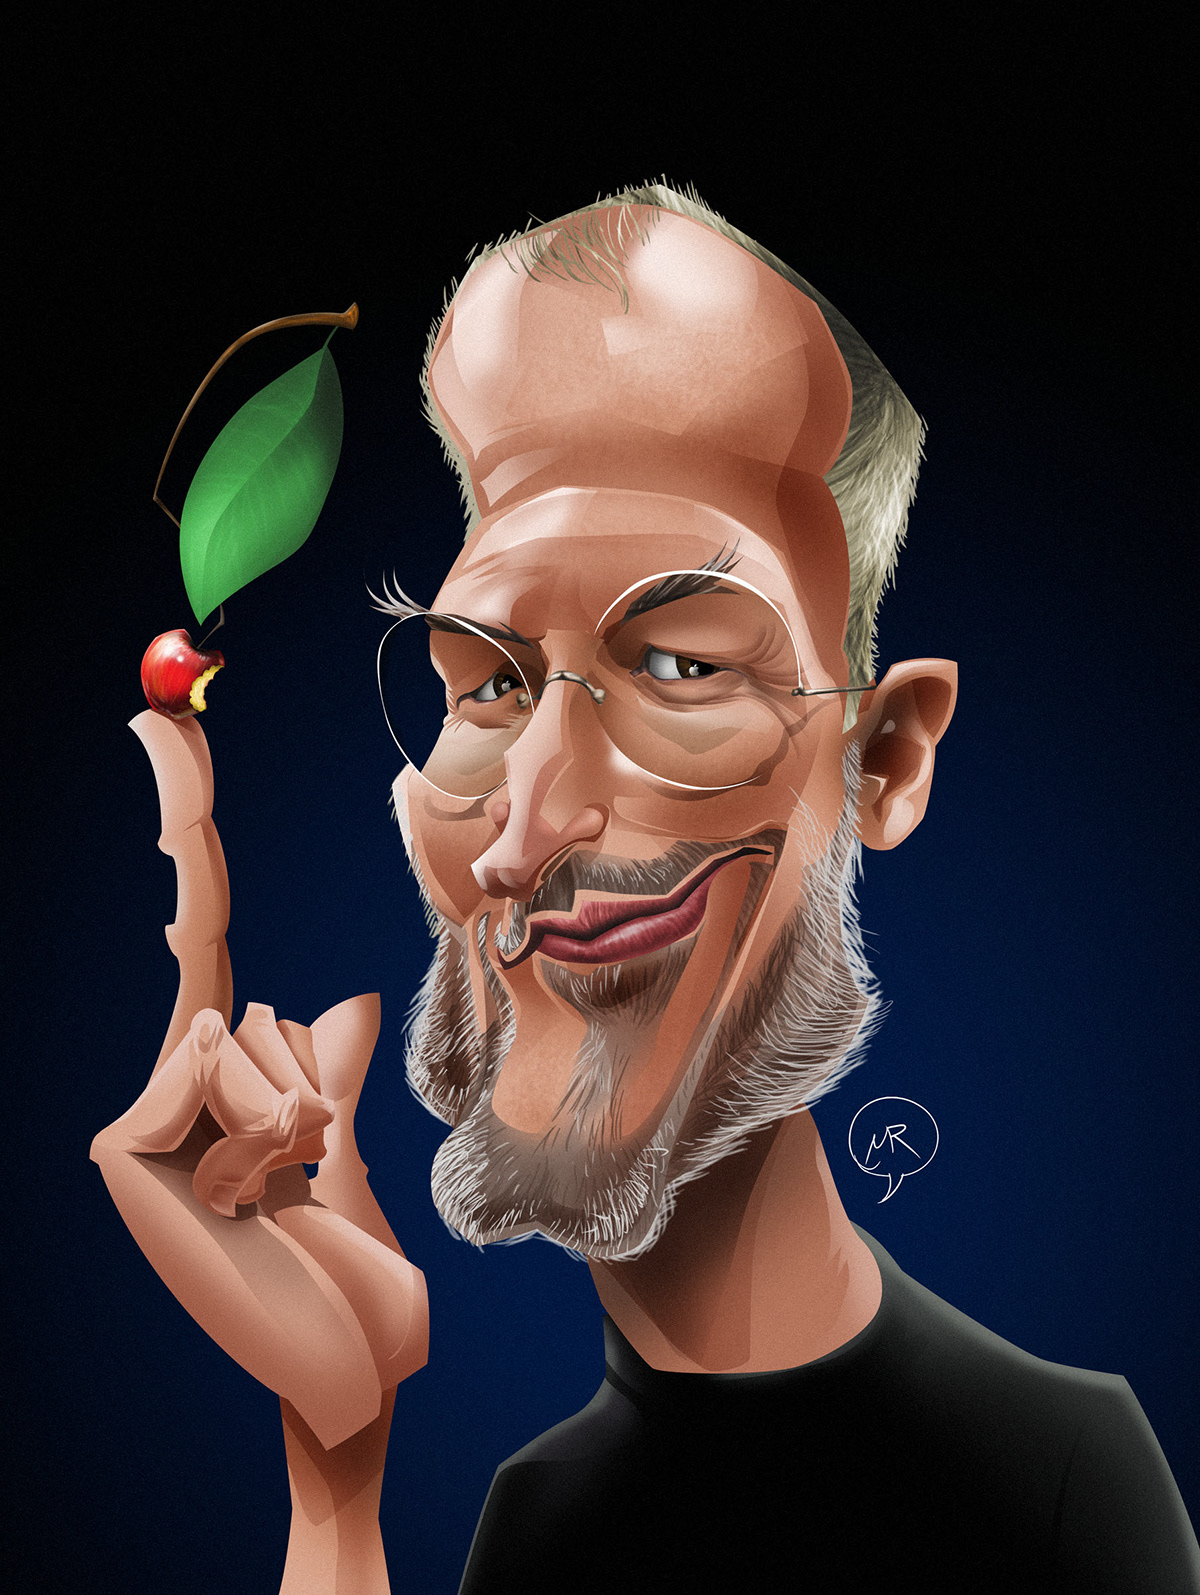 Steve Jobs portrait caricature   digital